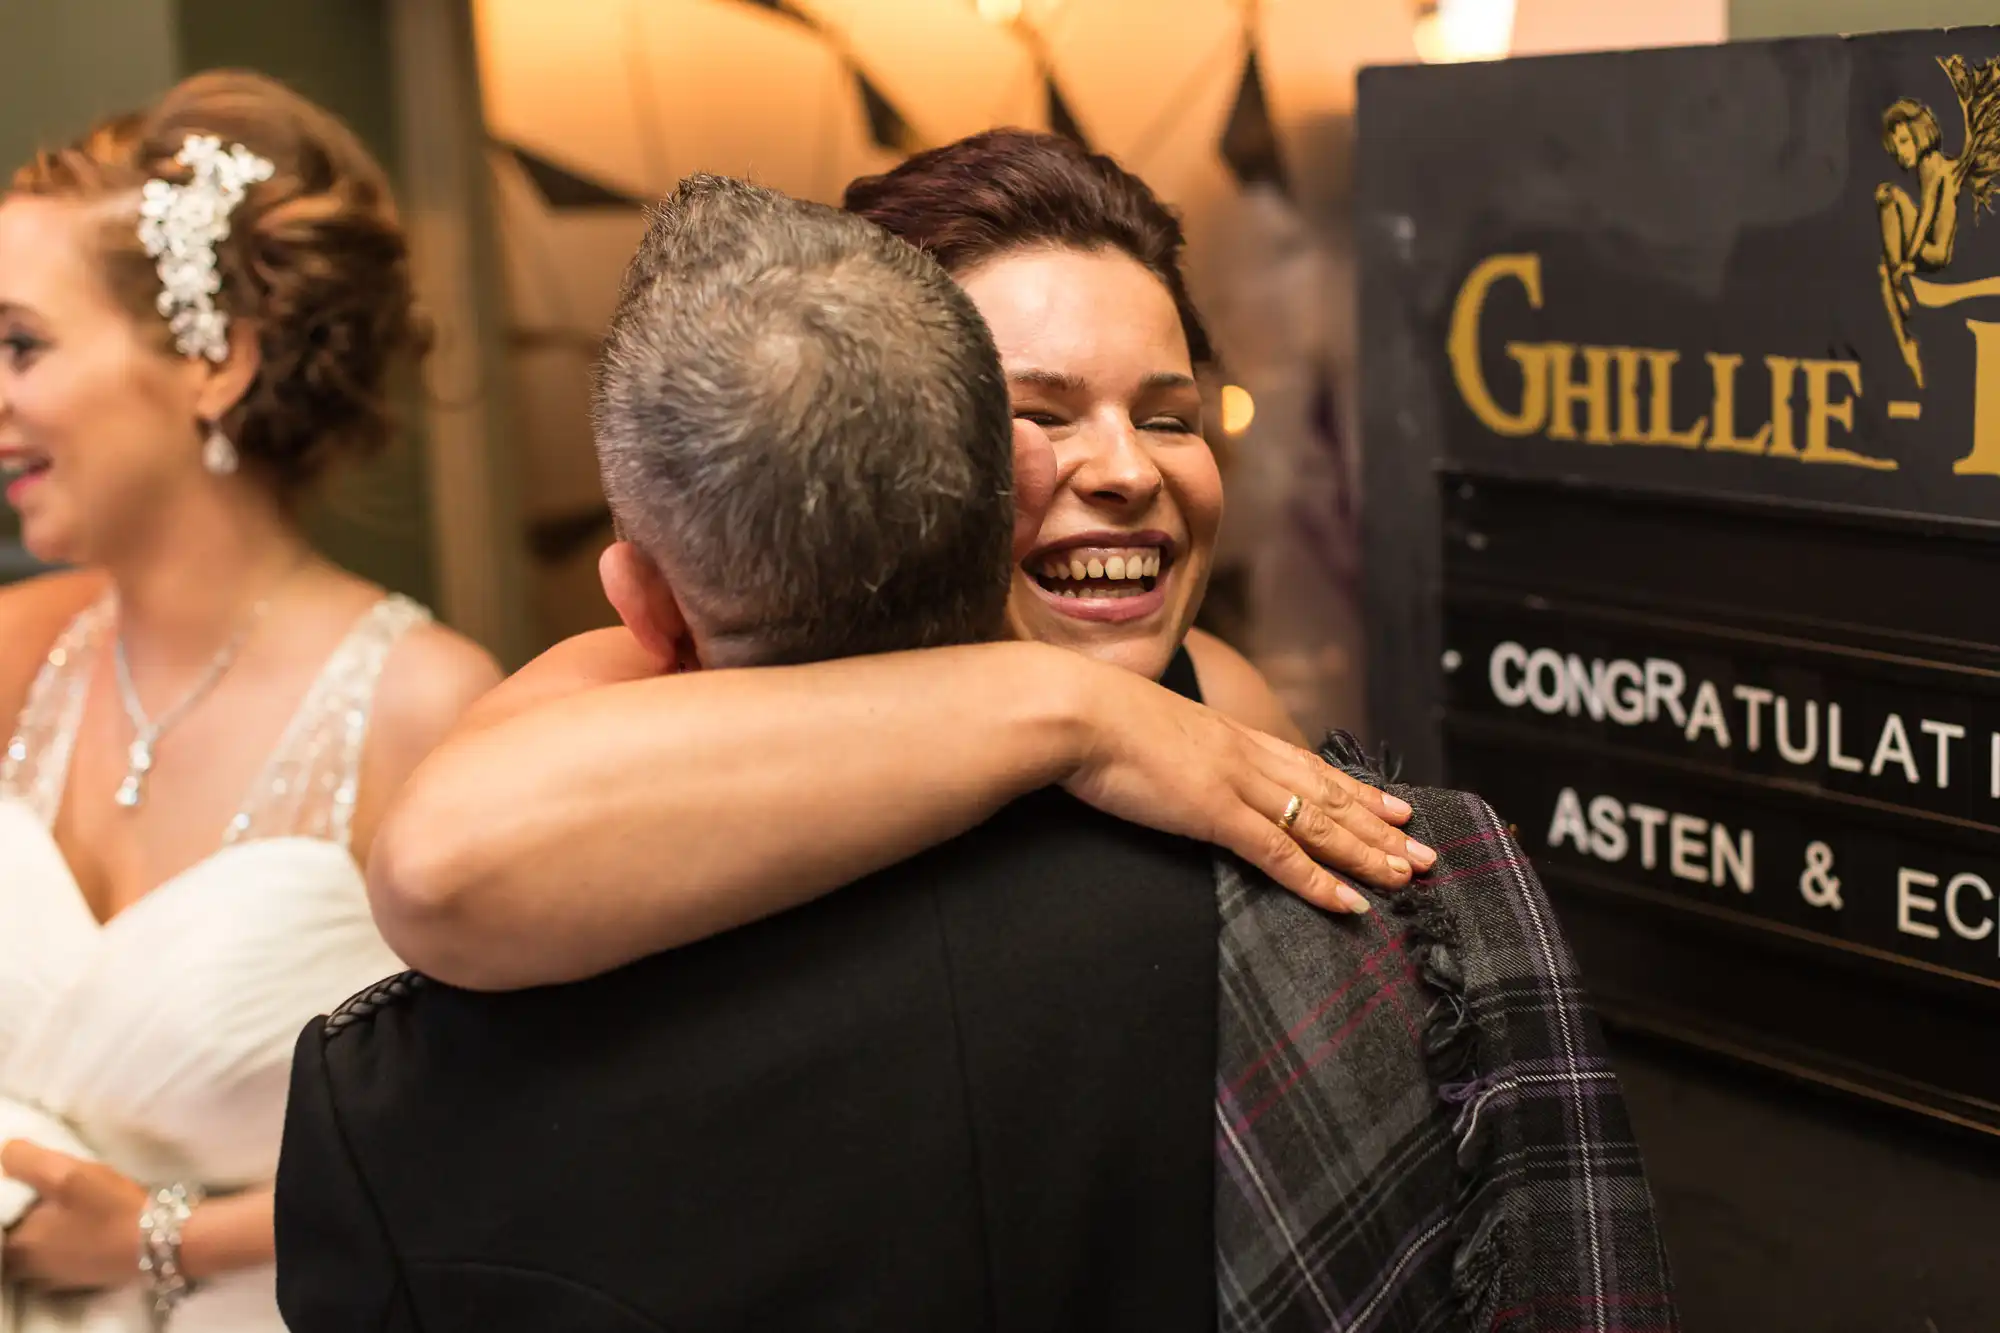 A joyful bride hugs a man in a kilt at a wedding reception, both smiling happily near a congratulatory sign.